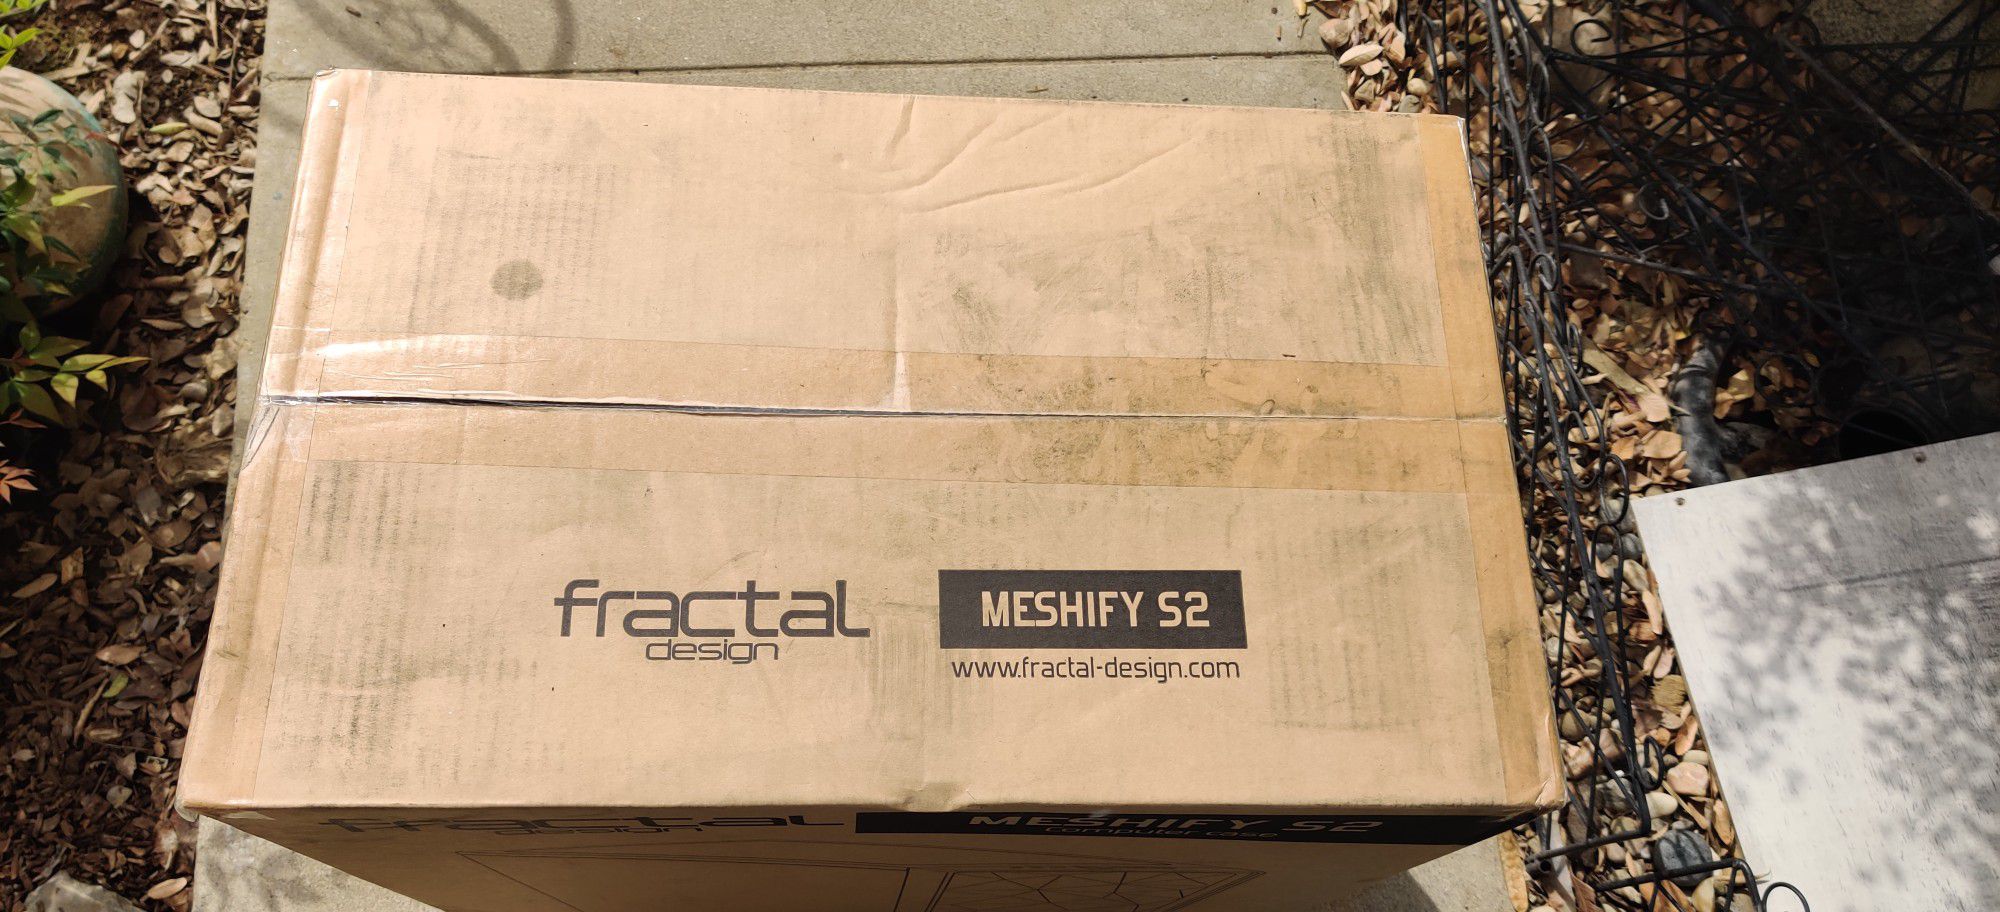 Fractal design pc cases new in box